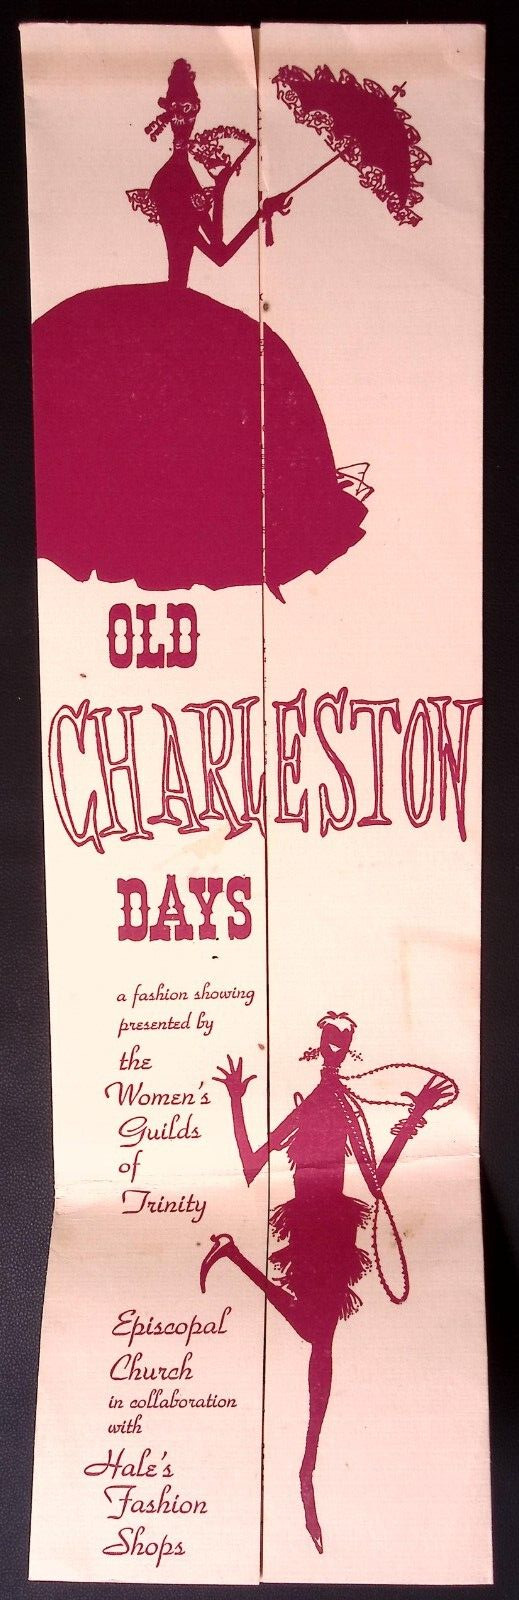 1954 LARGE PROGRAM OLD CHARLESTON DAYS WOMEN'S GUILD OF TRINITY HALE'S SHOP  W64